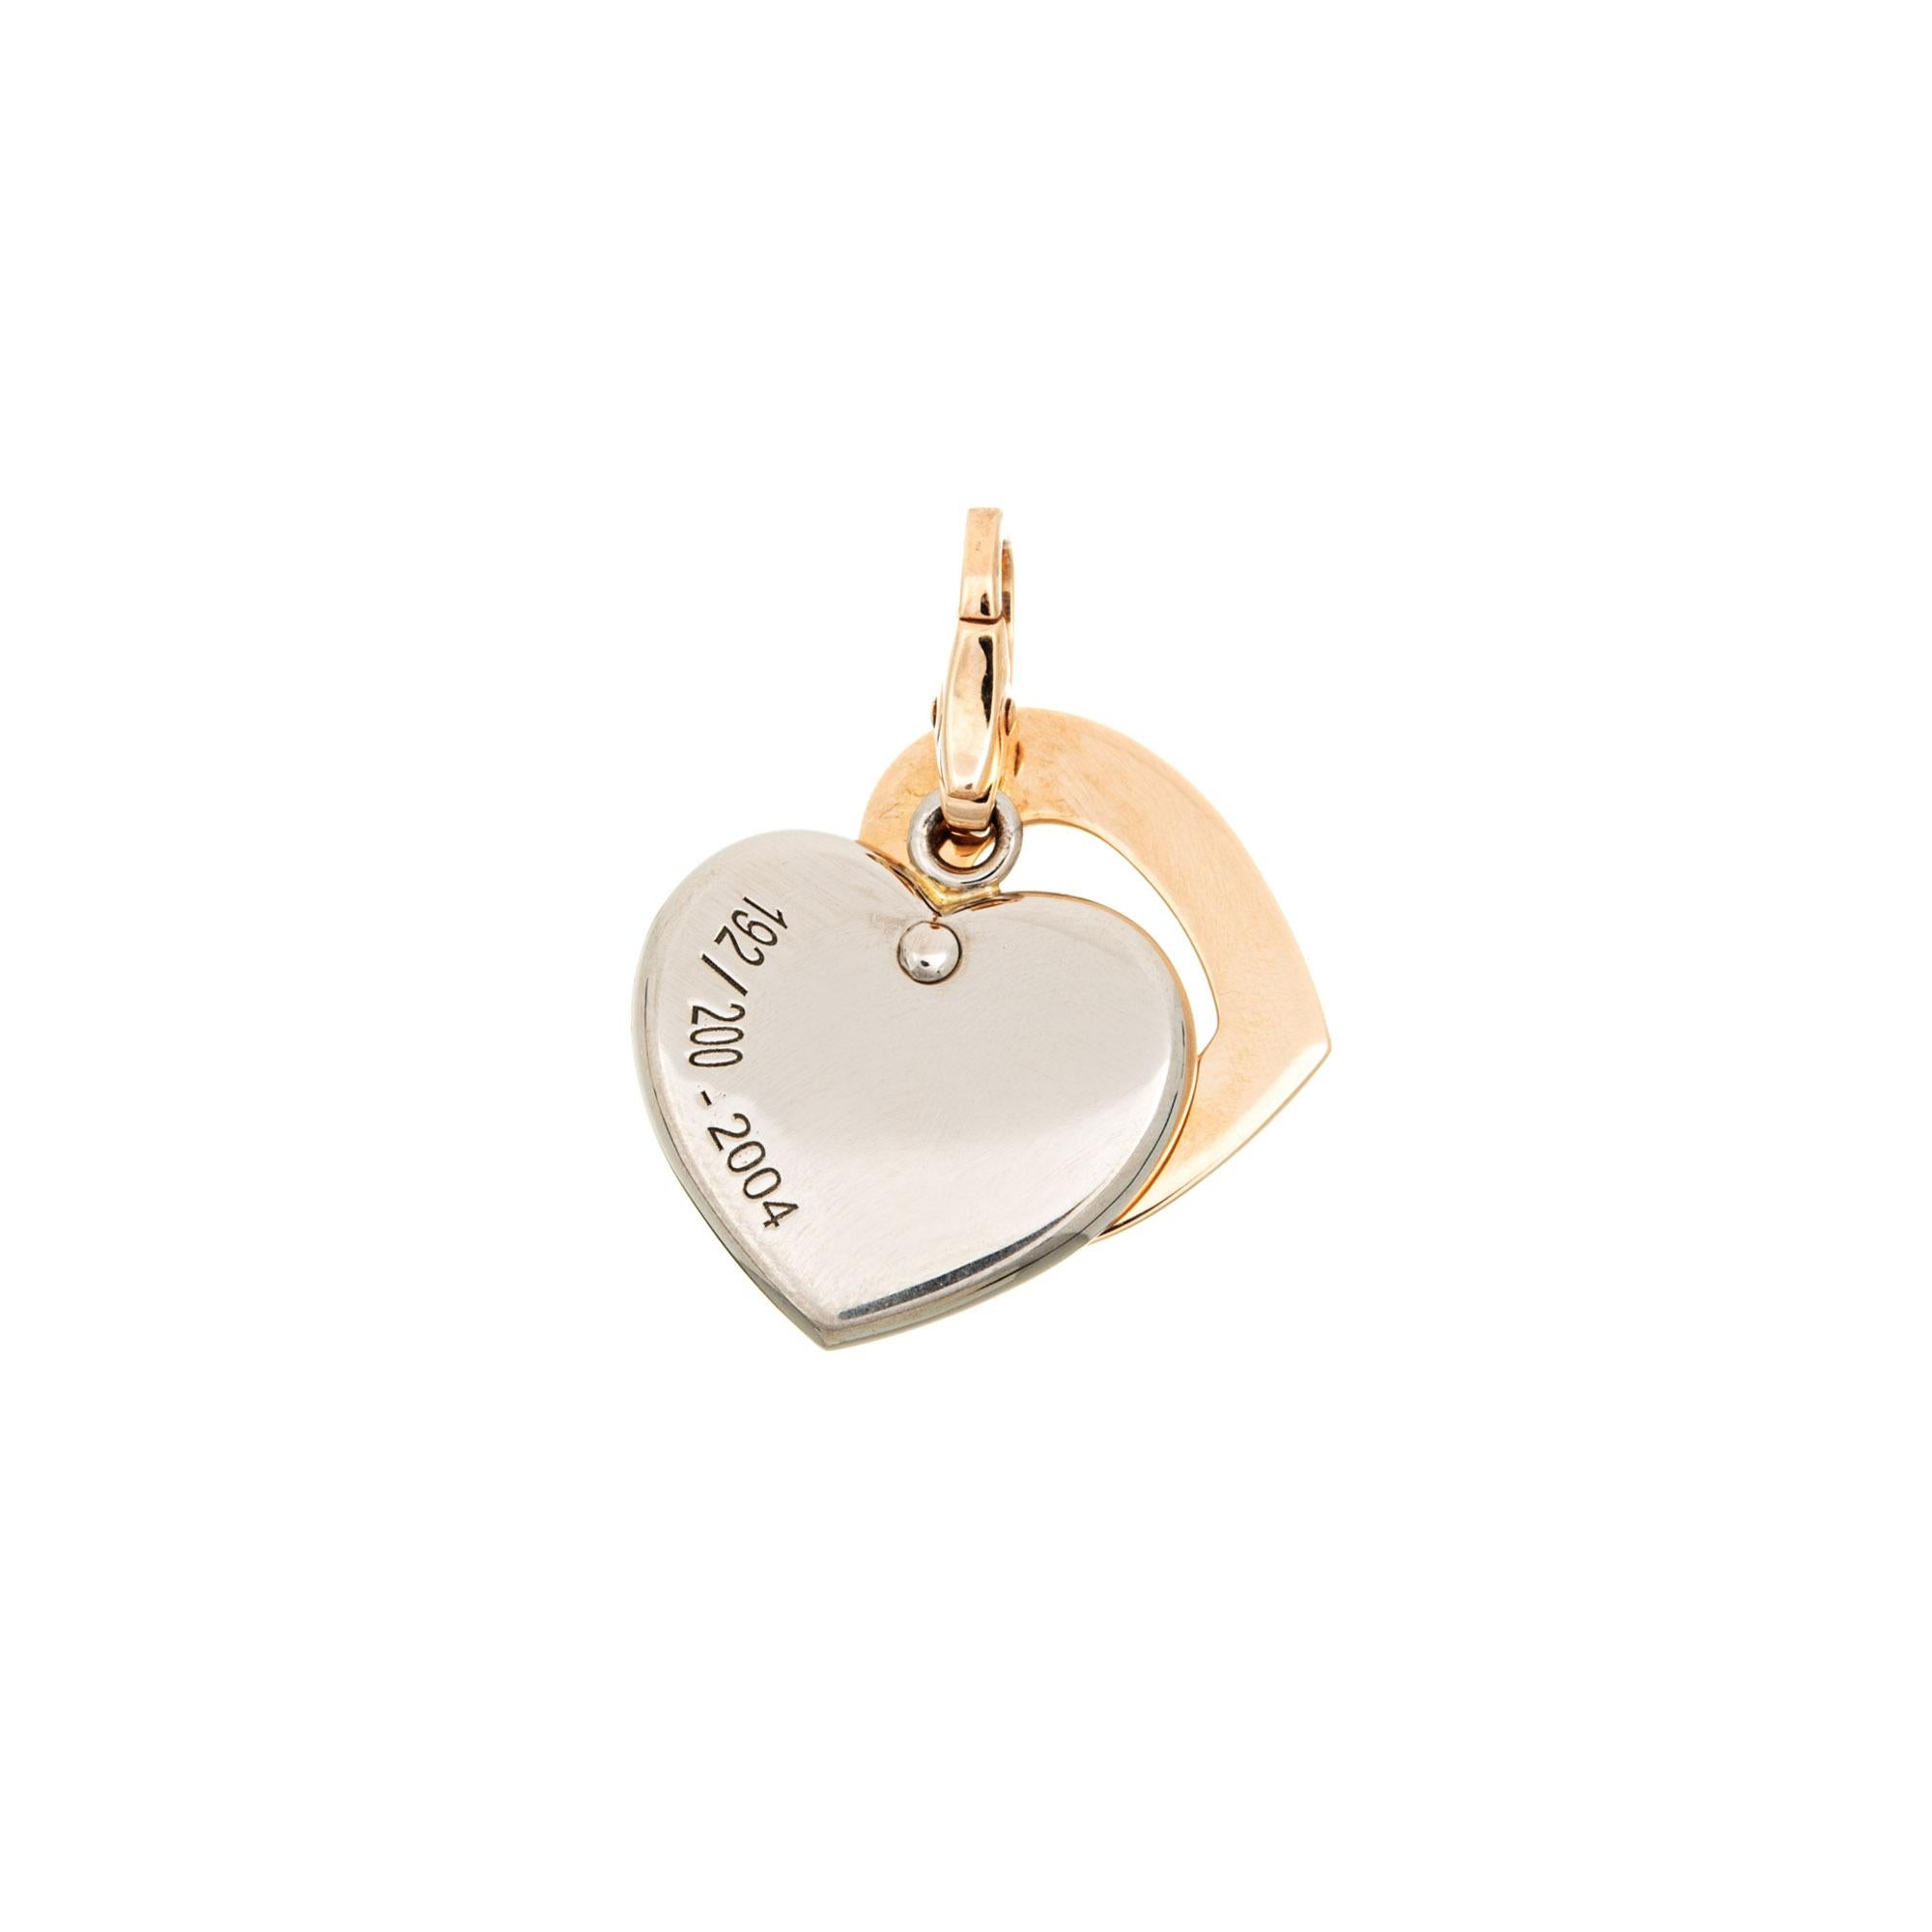 Modern Limited Edition Cartier Diamond Heart Pendant Charm 18k Yellow Gold Jewelry